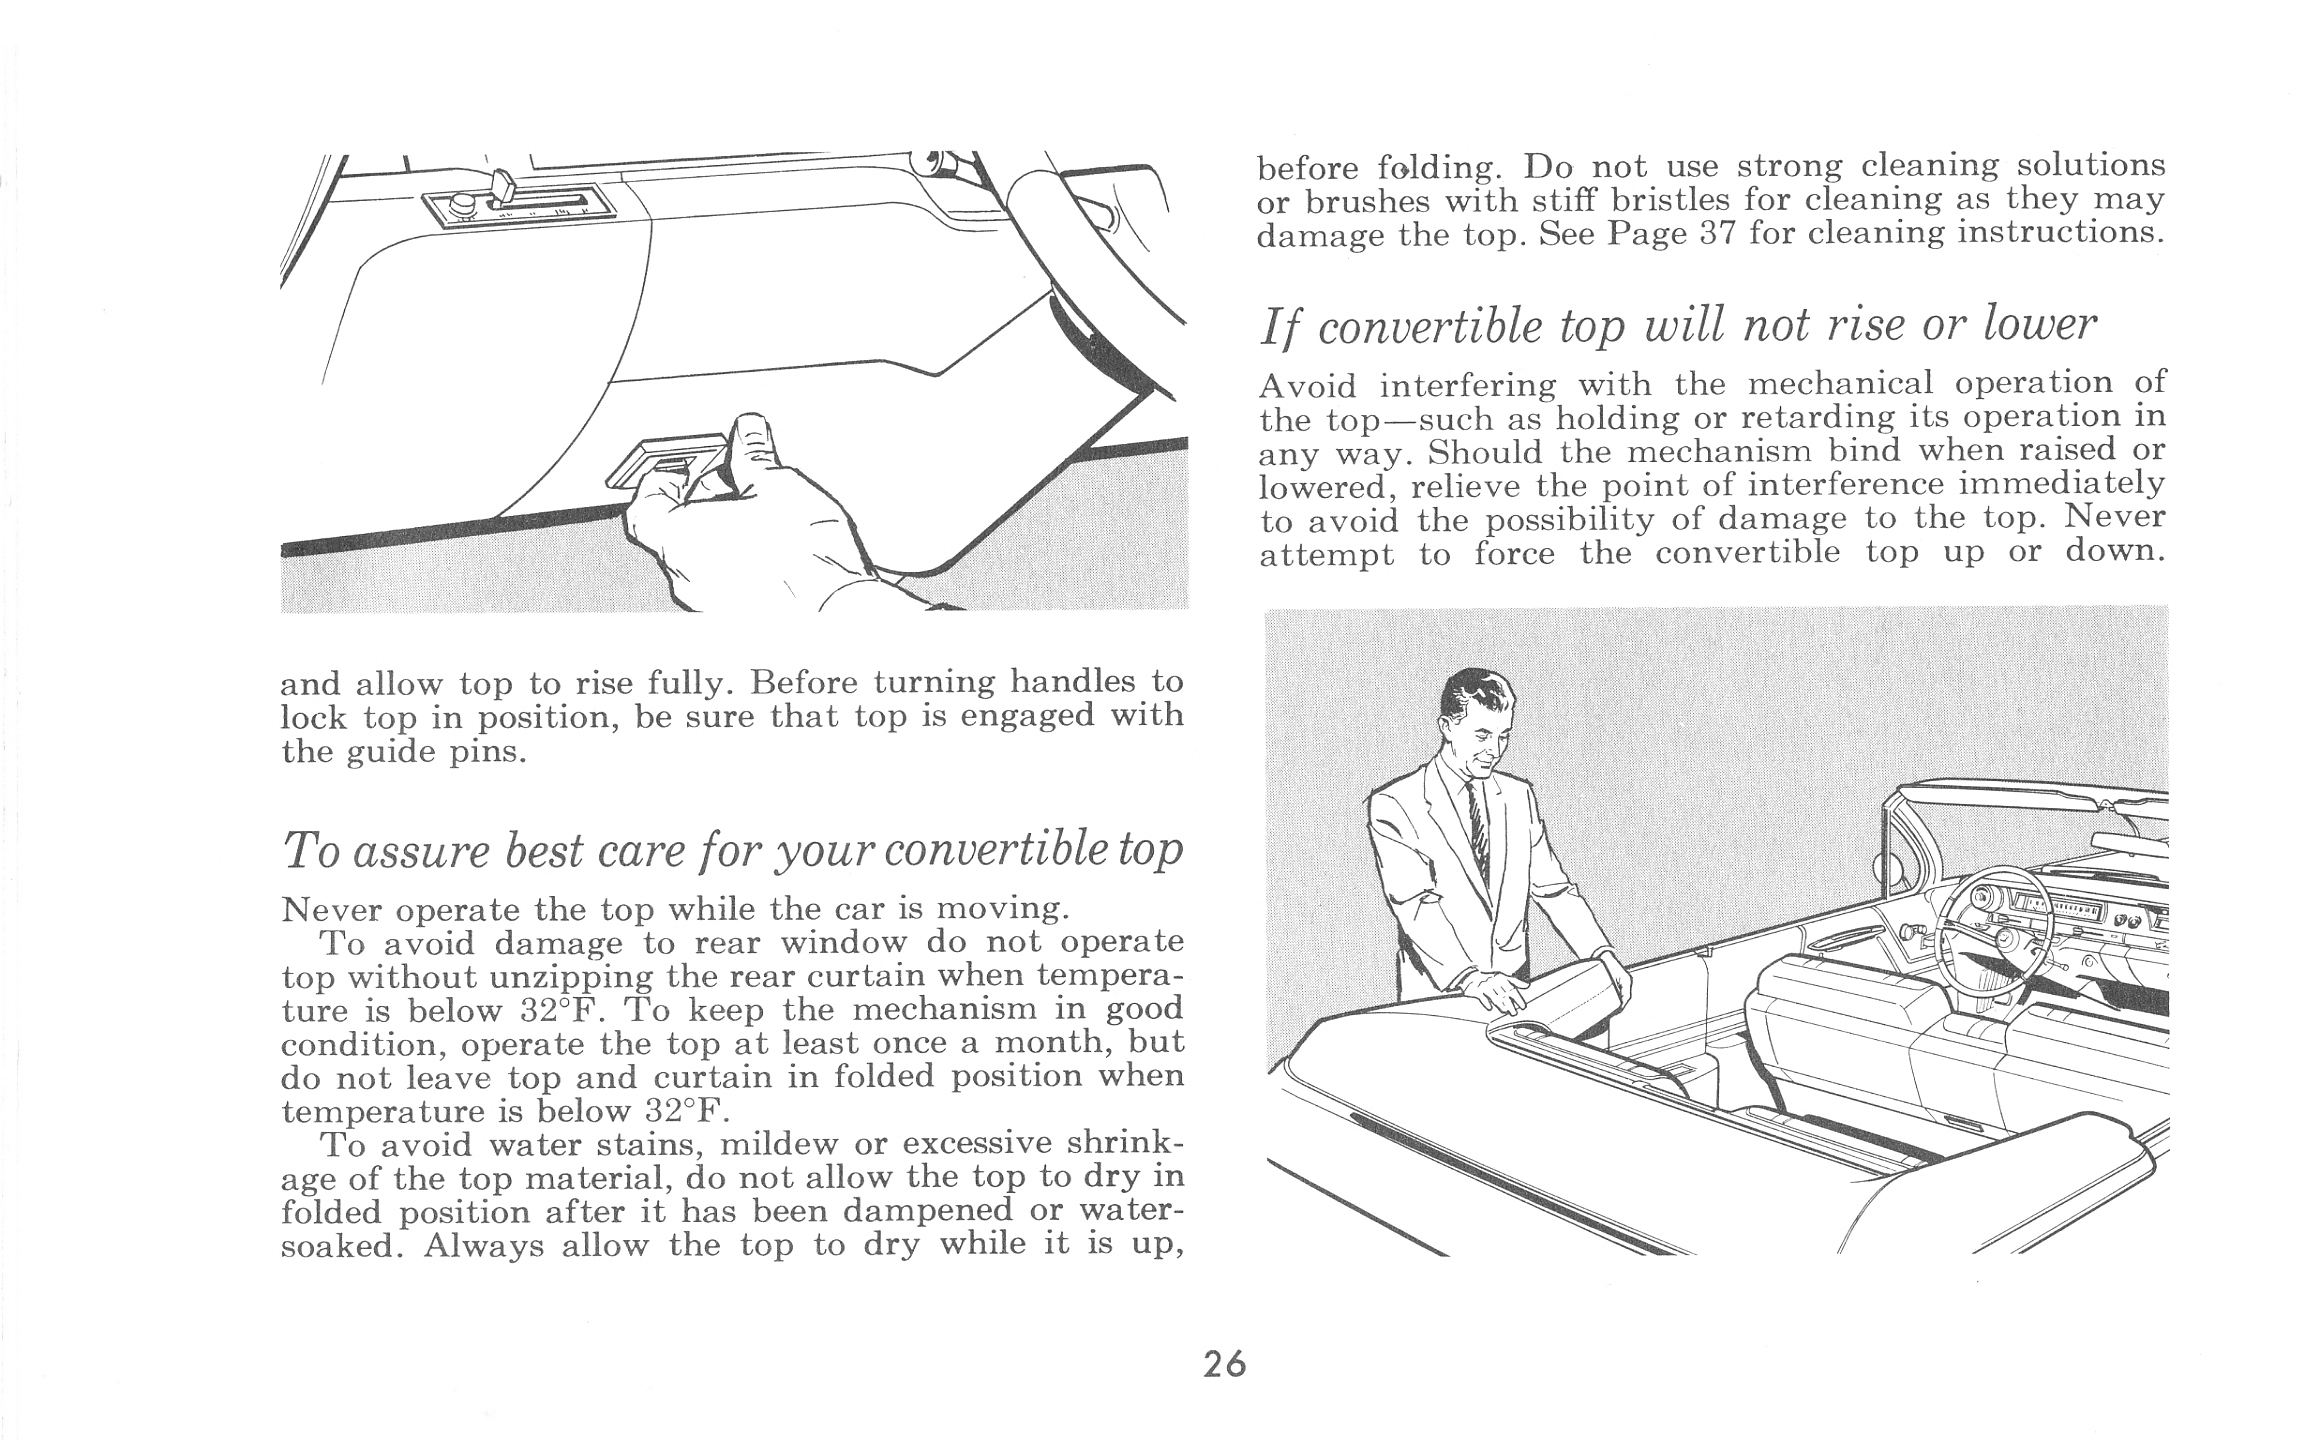 n_1962 Cadillac Owner's Manual-Page 26.jpg